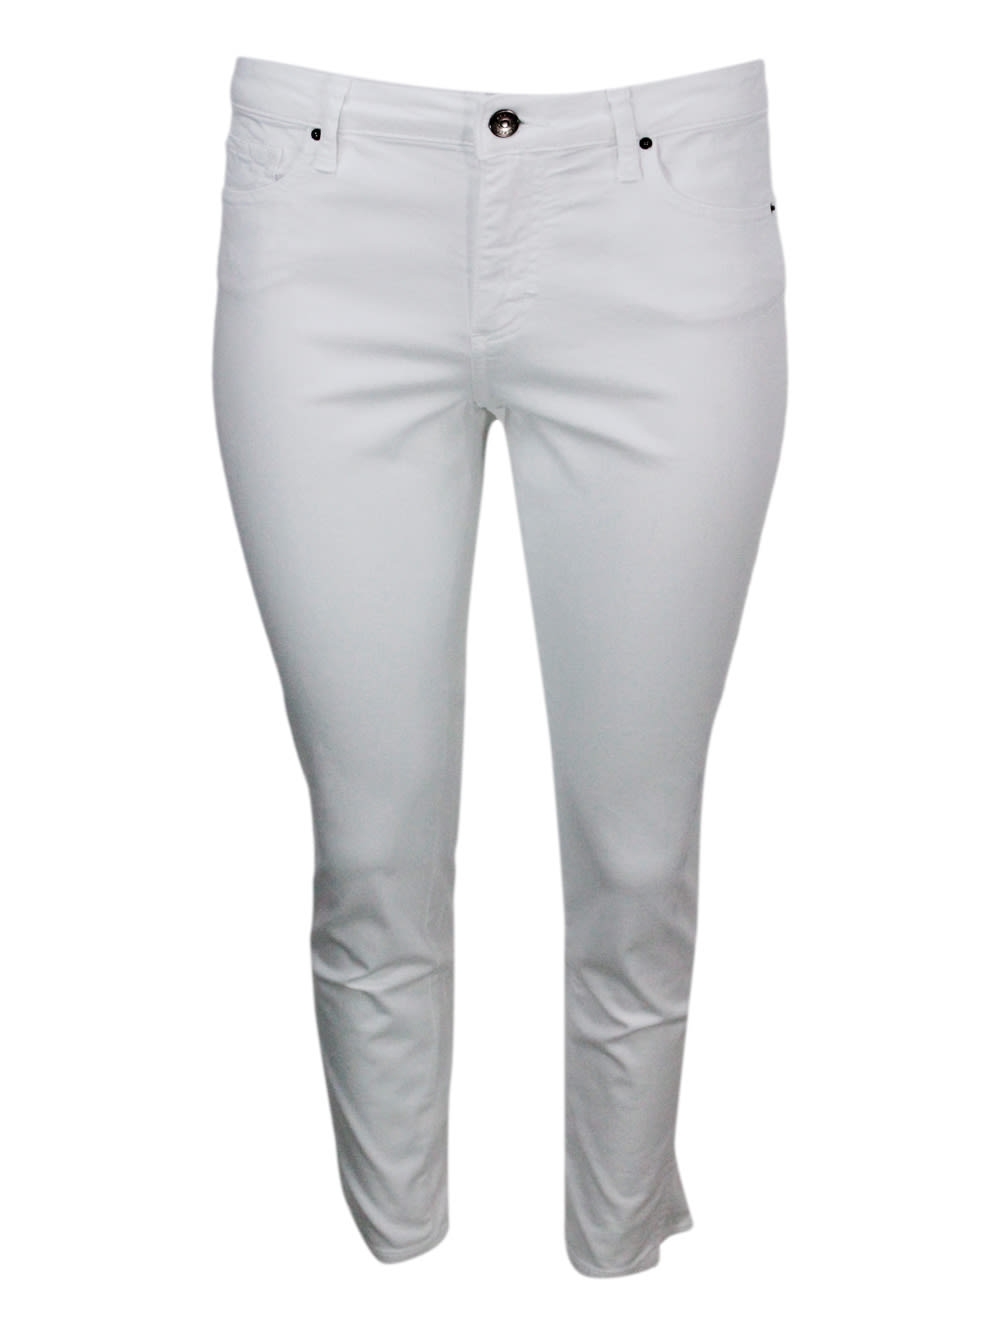 5-pocket Trousers In Soft Stretch Cotton Super Skinny Capri. Zip And Button Closure.